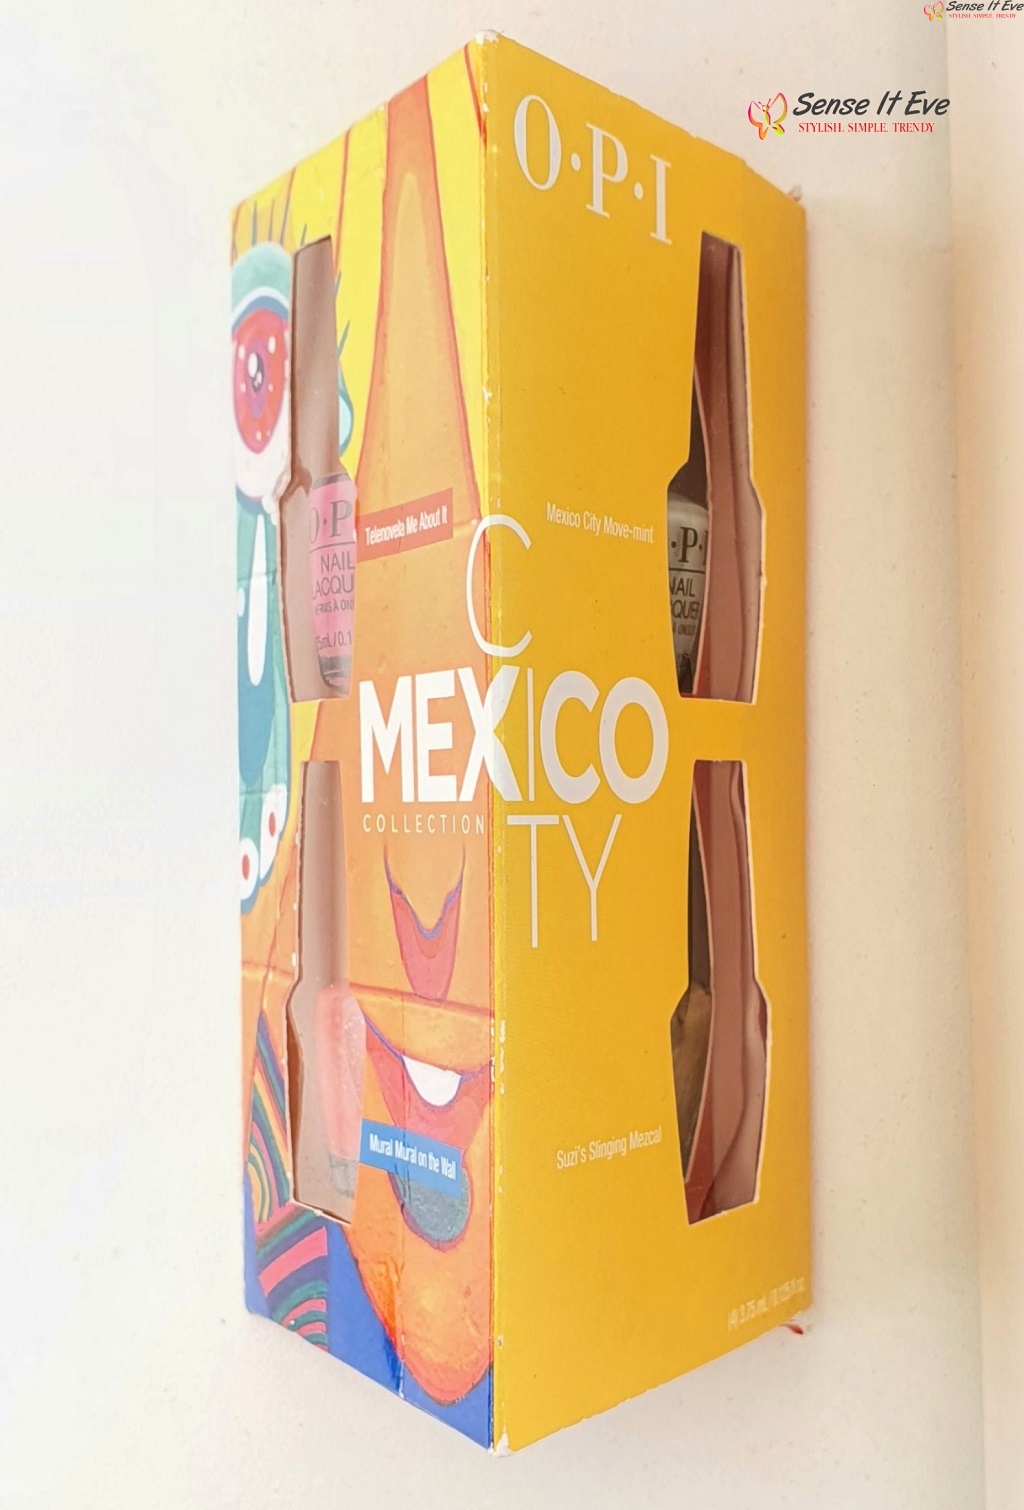 OPI Maxico City Collection Sense It Eve OPI Mexico City Collection Mini Set Review